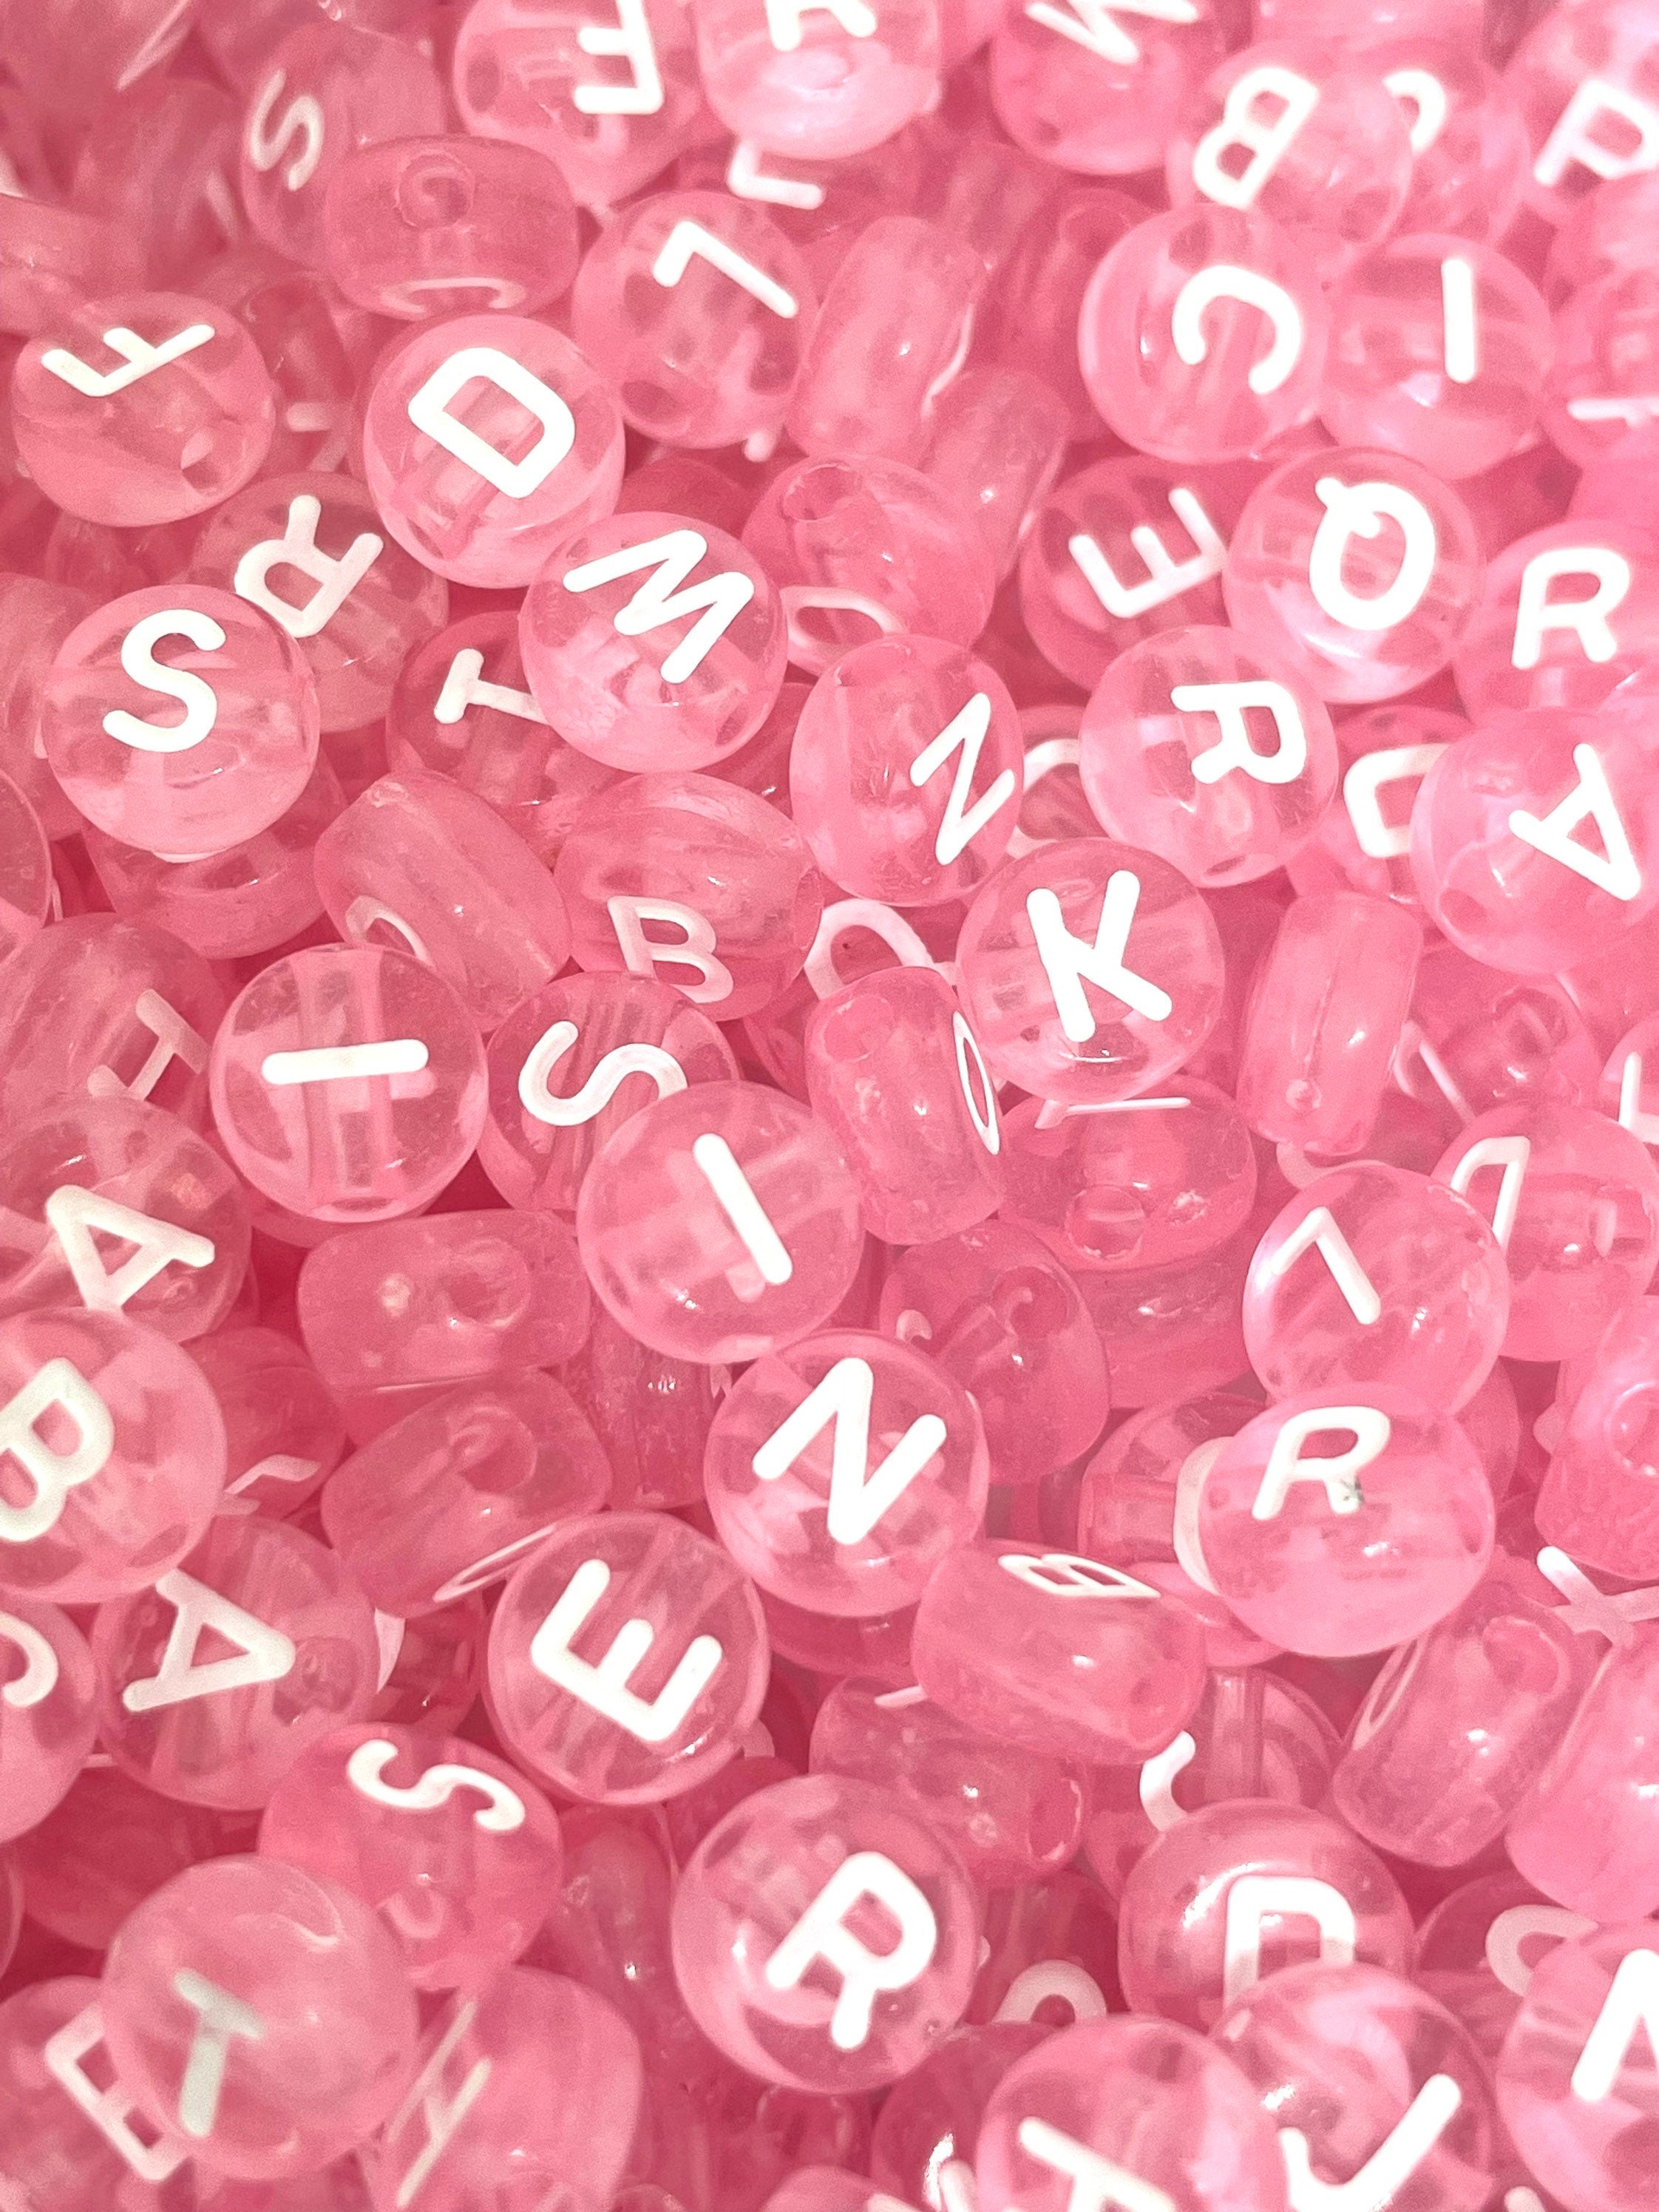 Round Acrylic Letter Beads Set for DIY Name Bracelets Necklace